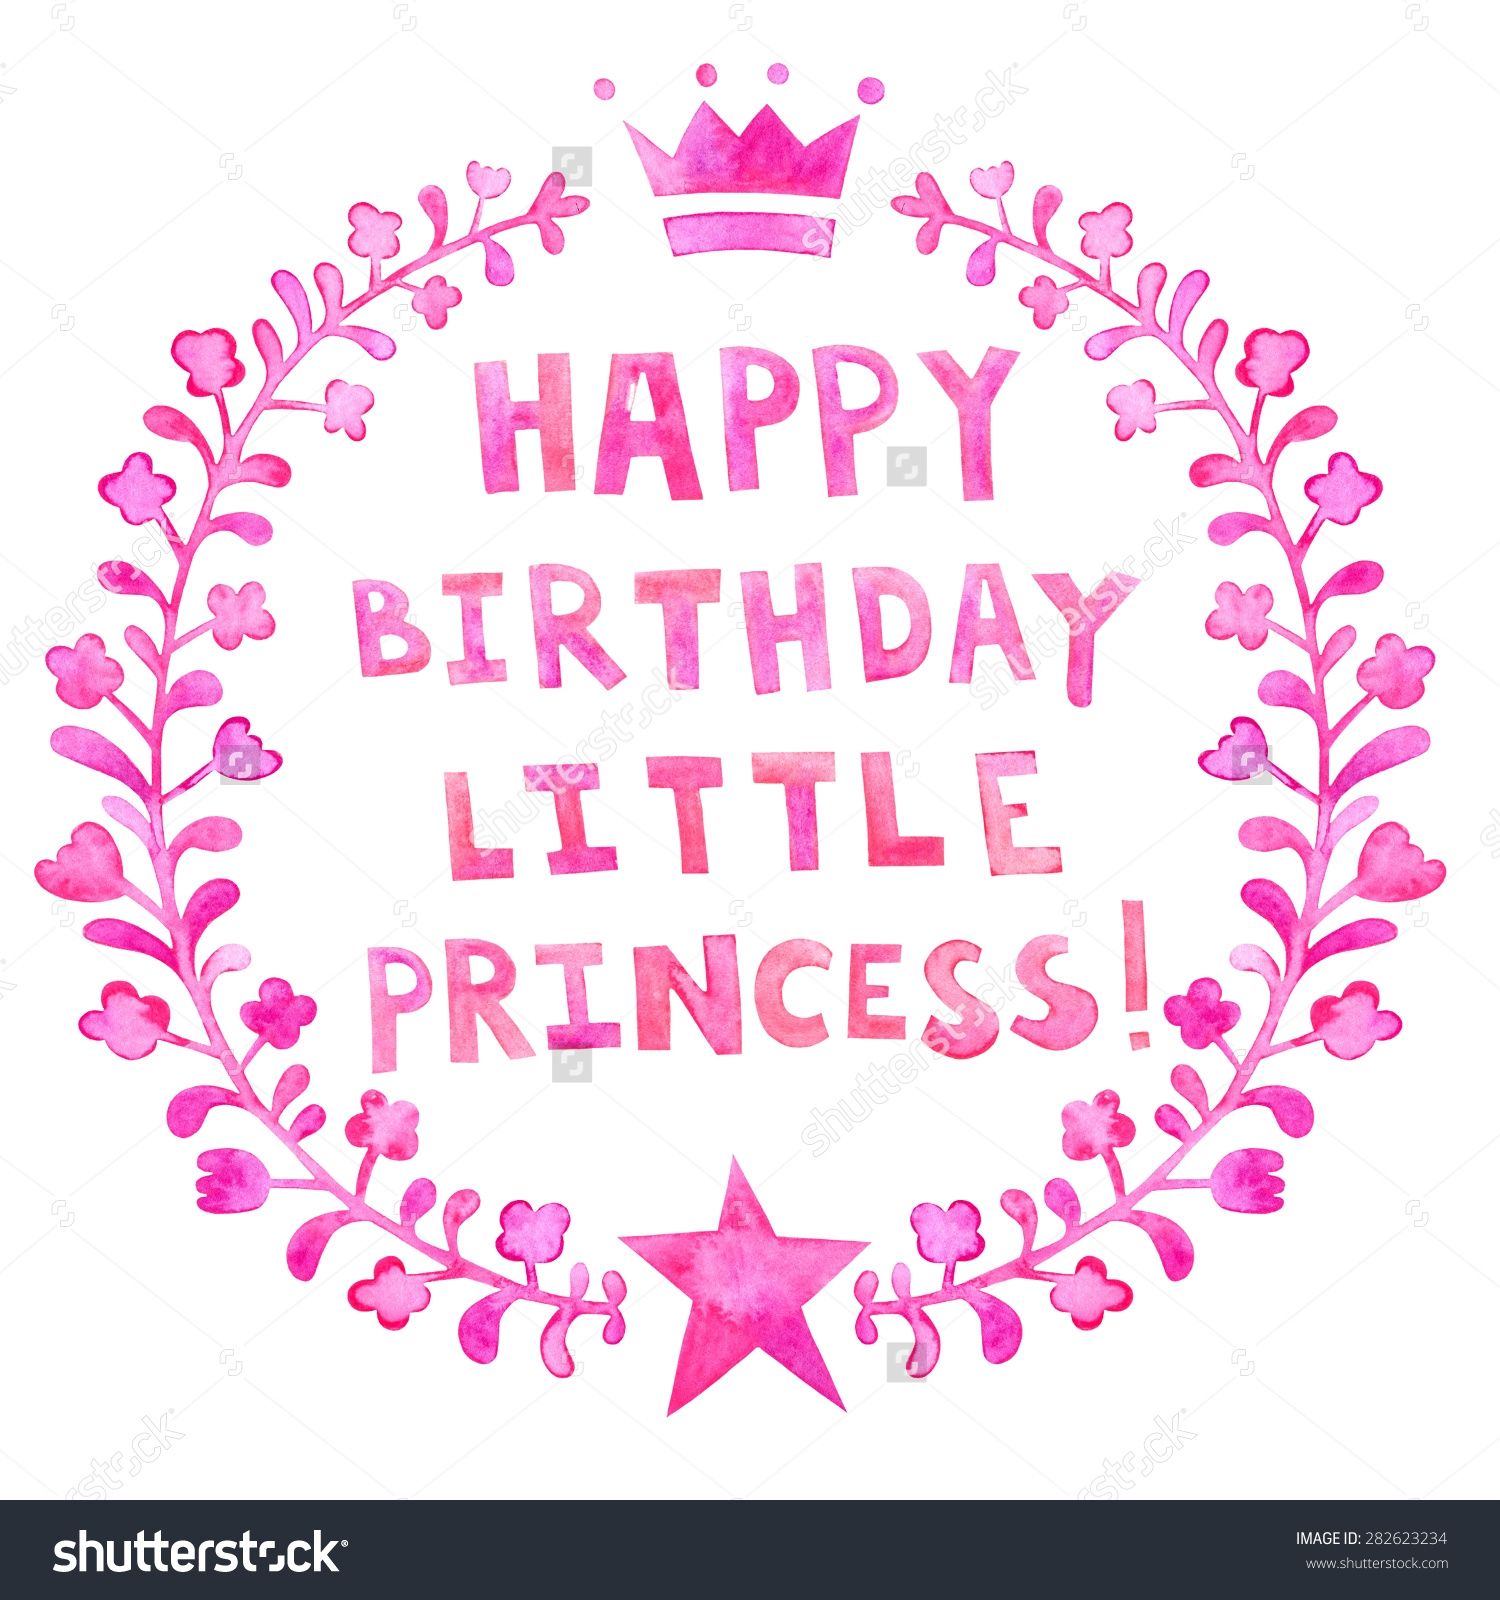 HBD little Princess | Babies | Pinterest | Happy birthday, Birthdays ...